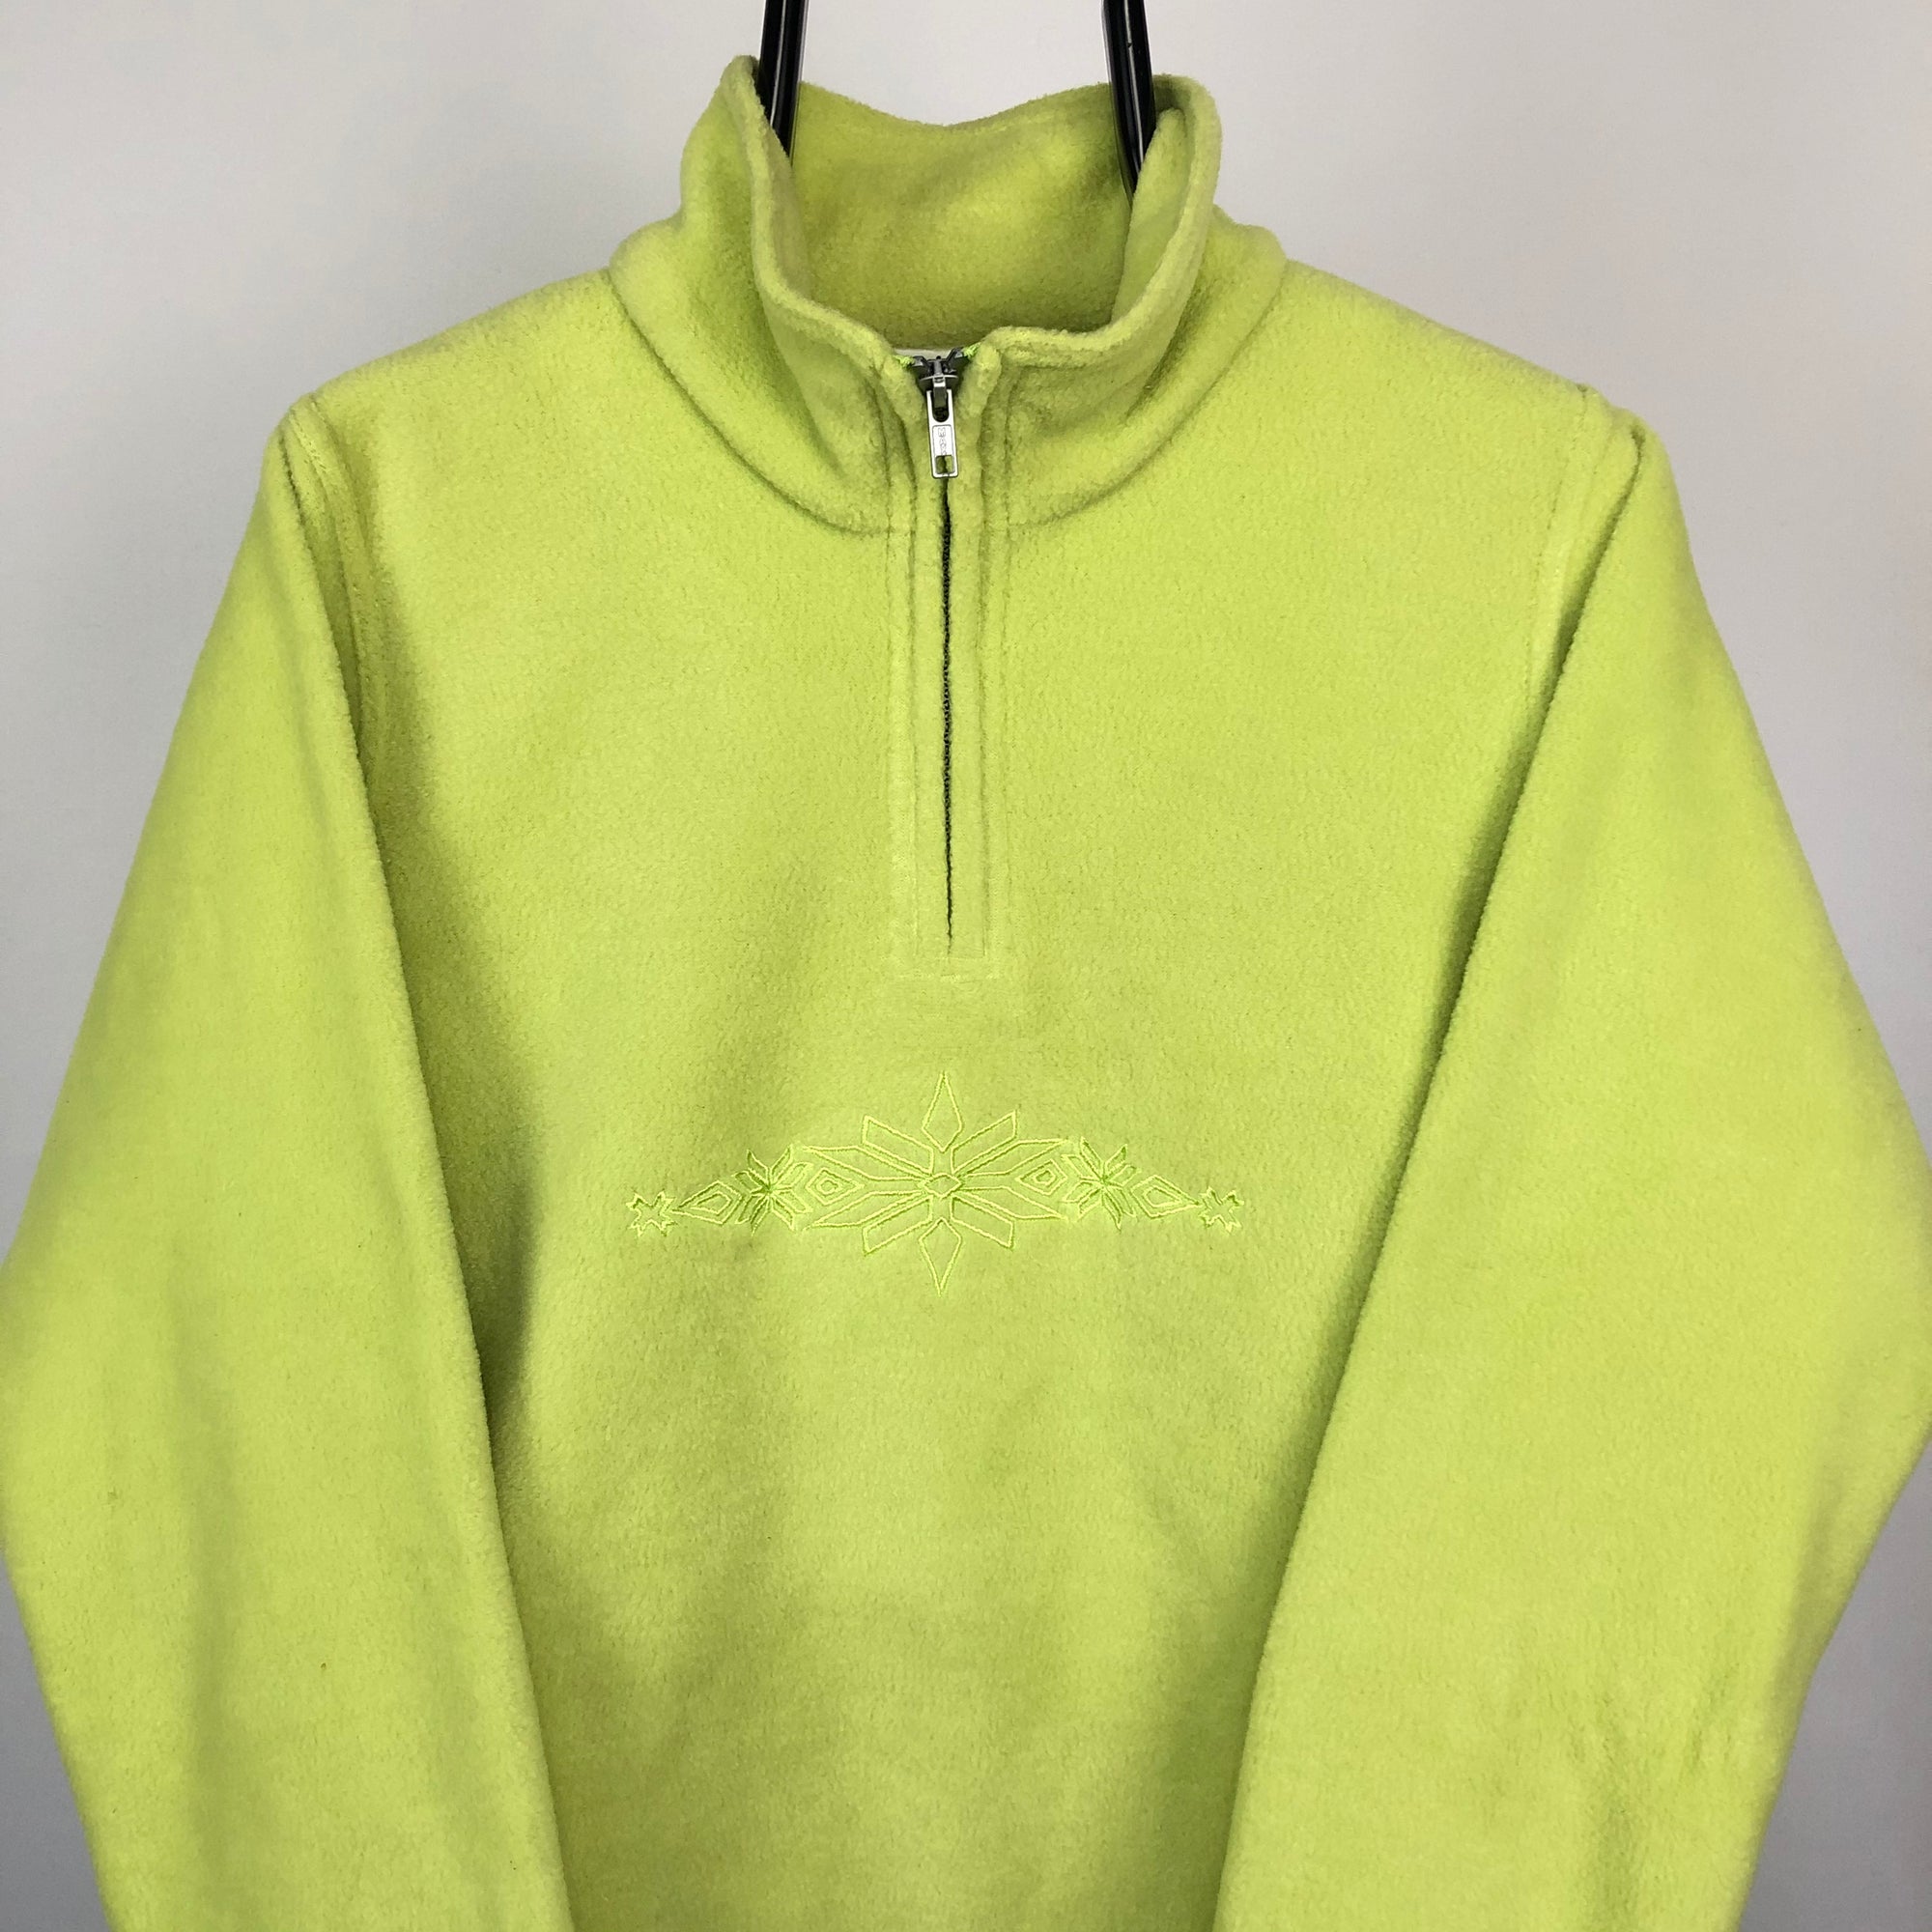 Vintage Etrirel Lime Green Fleece - Men's Small/Women's Medium